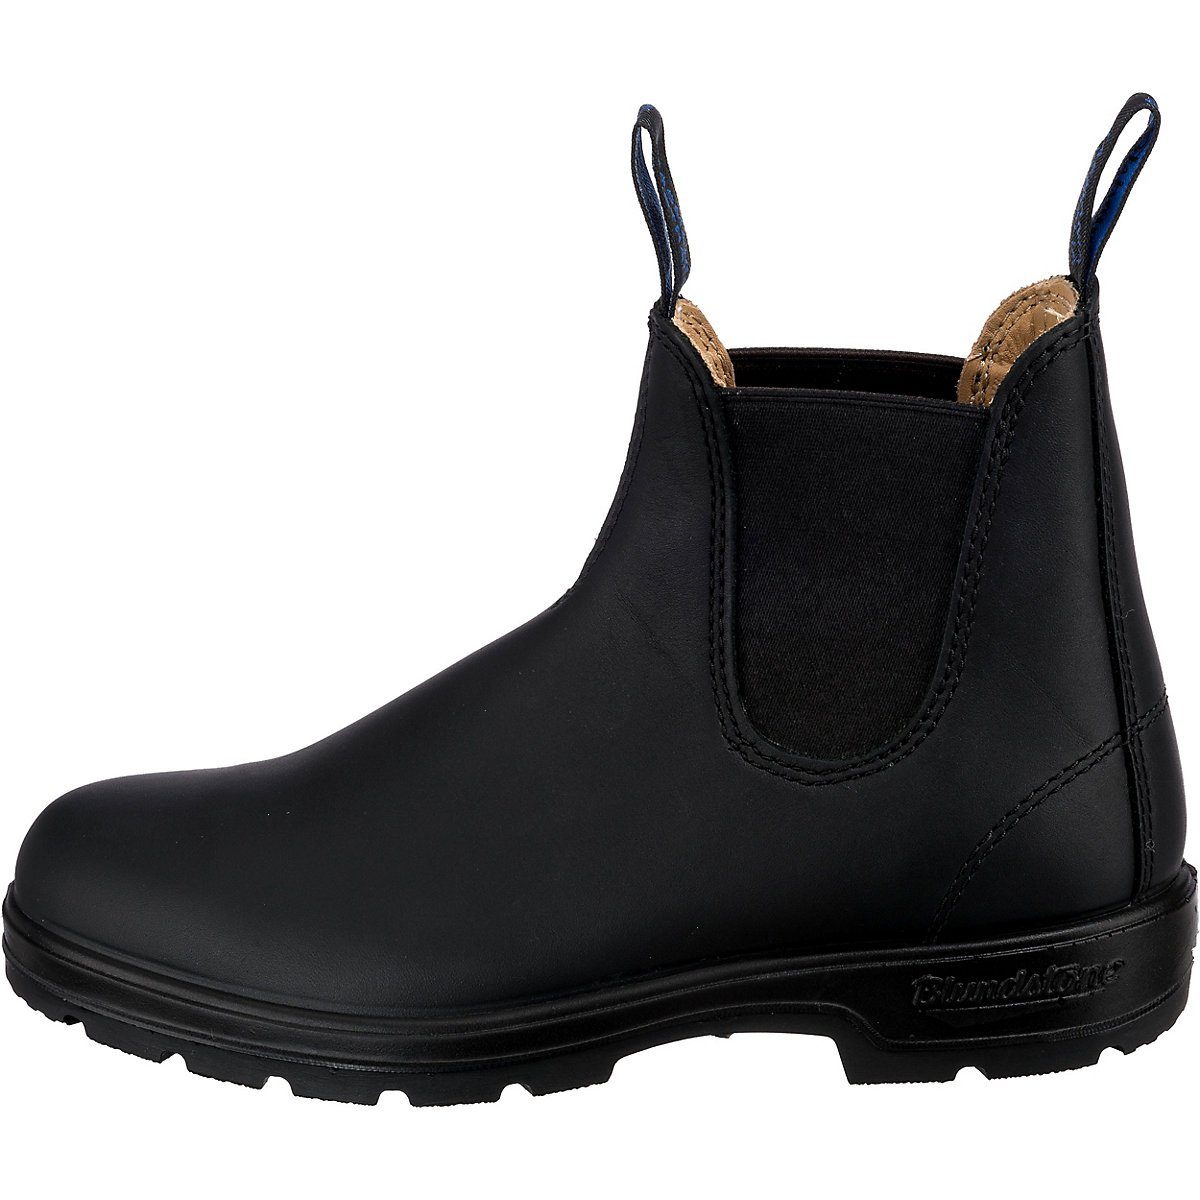 Schuhe Boots Blundstone 566 Black Waterproof Leather (warm & Dry) Chelsea Chelseaboots